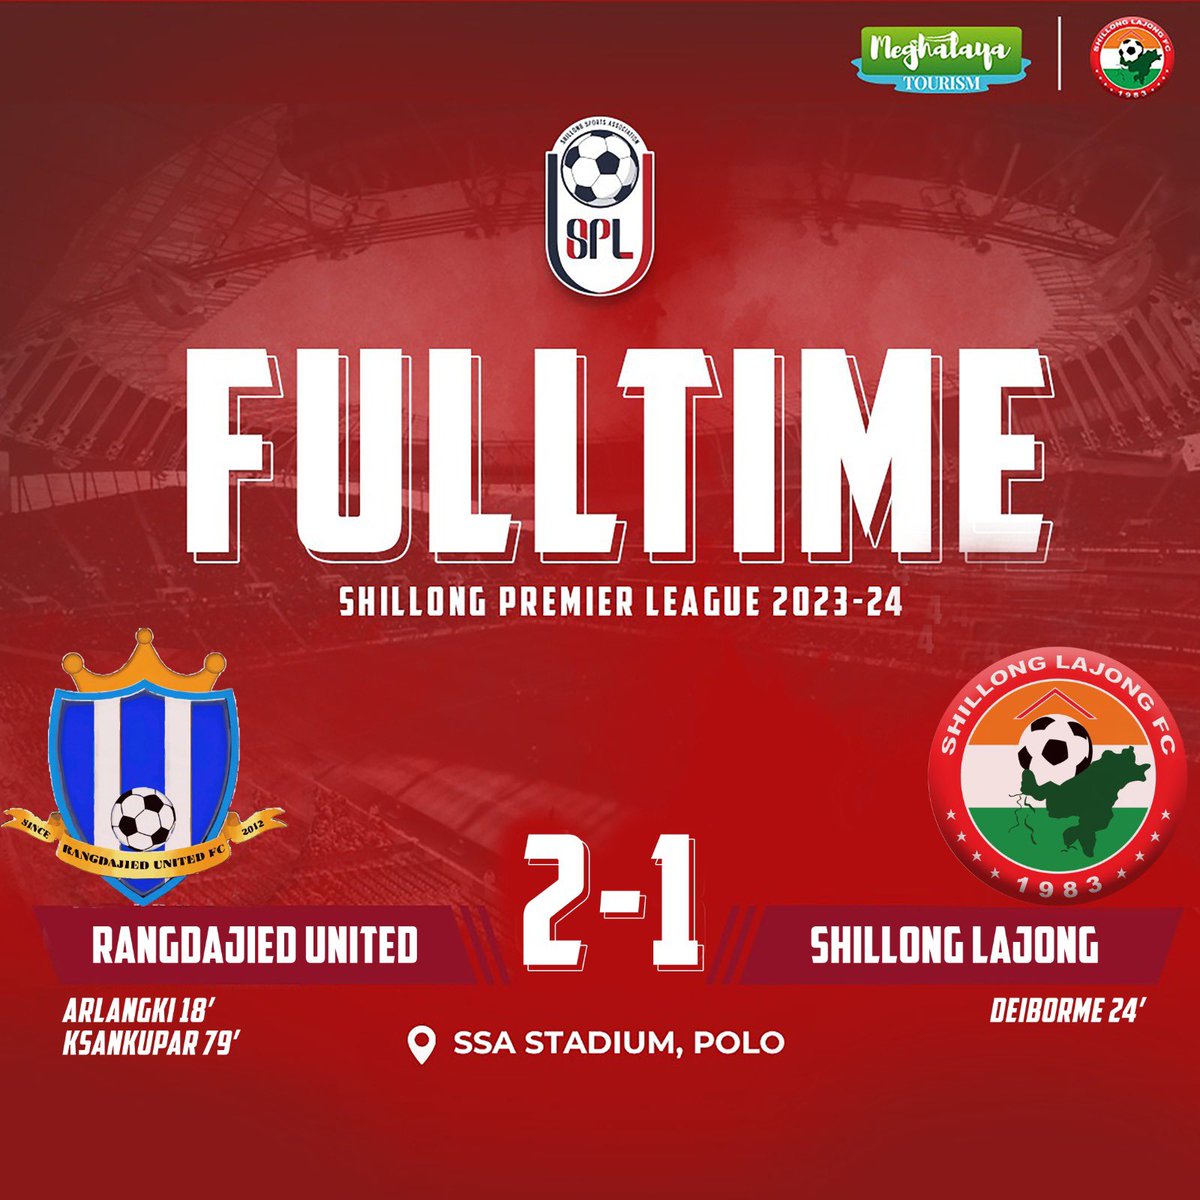 First Defeat for Lajong in the SPL #shillongpremierleague #shillonglajong #lajong #meghalayatourism #meghalaya #sarongiakalajong